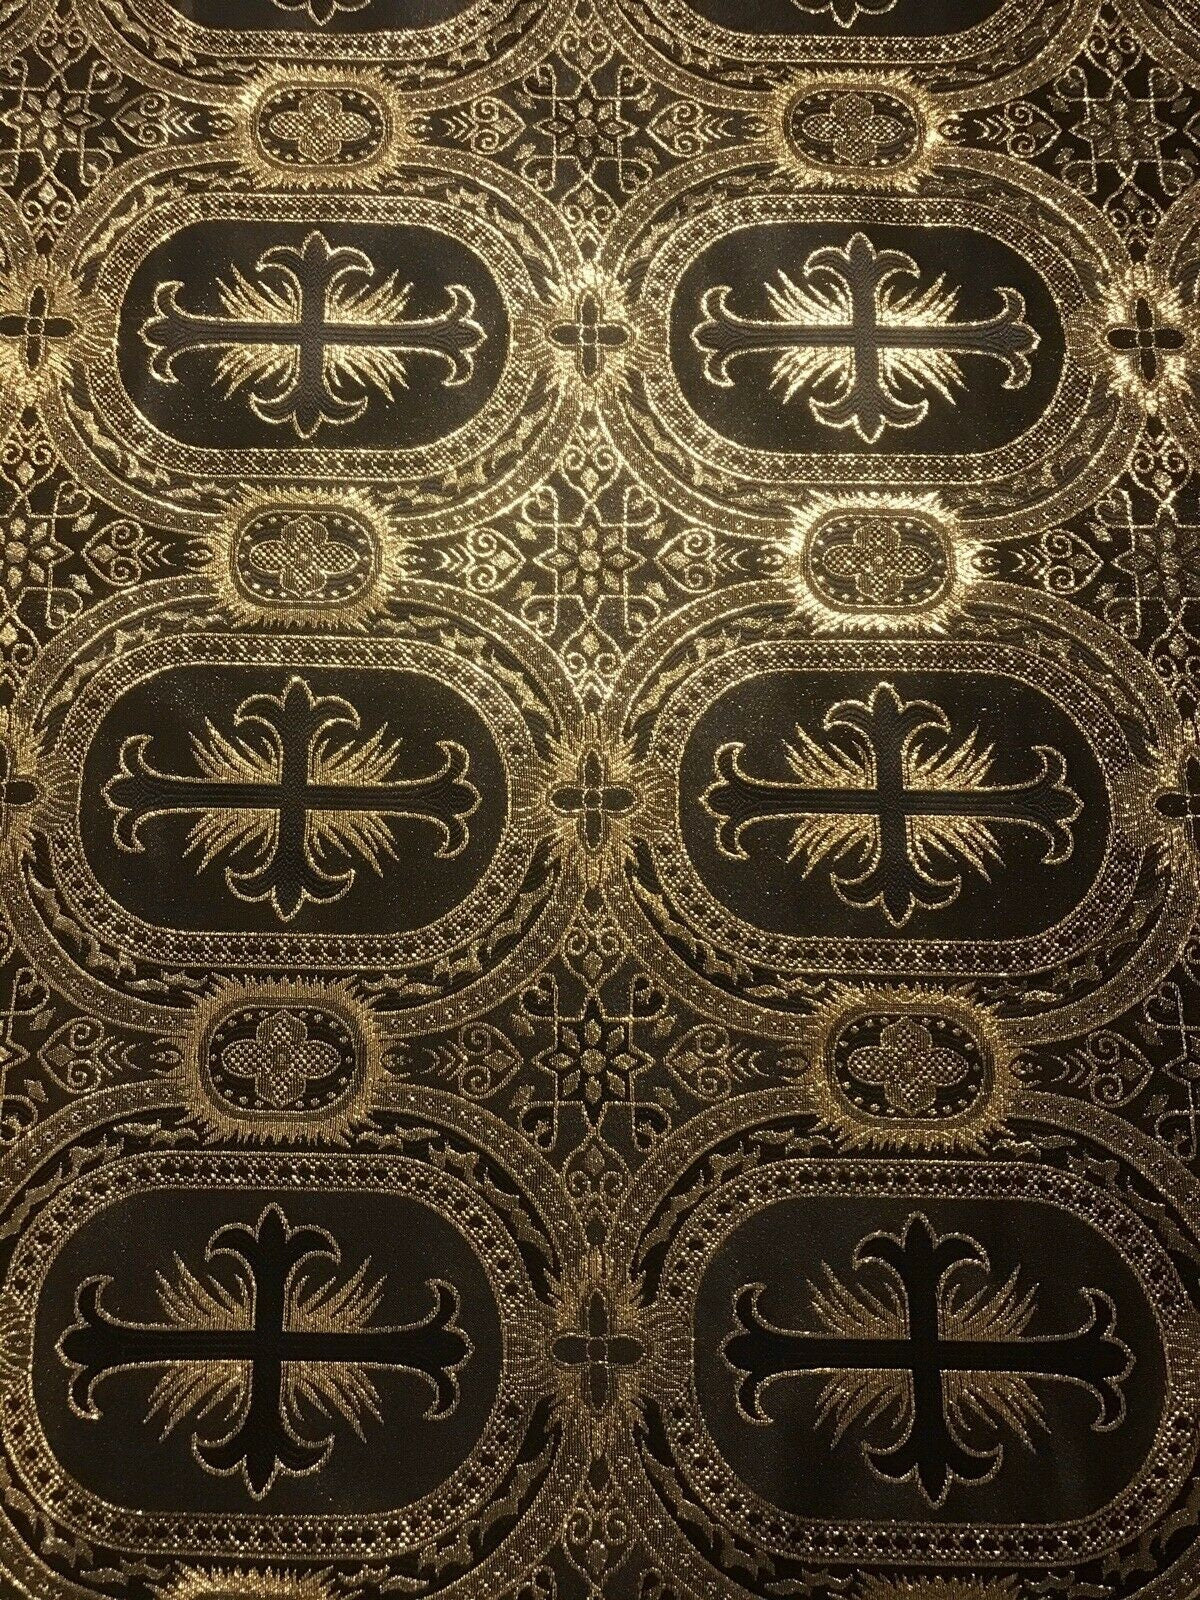 BLACK GOLD Metallic Liturgical Cross Brocade Fabric (55 in.) Sold By The Yard